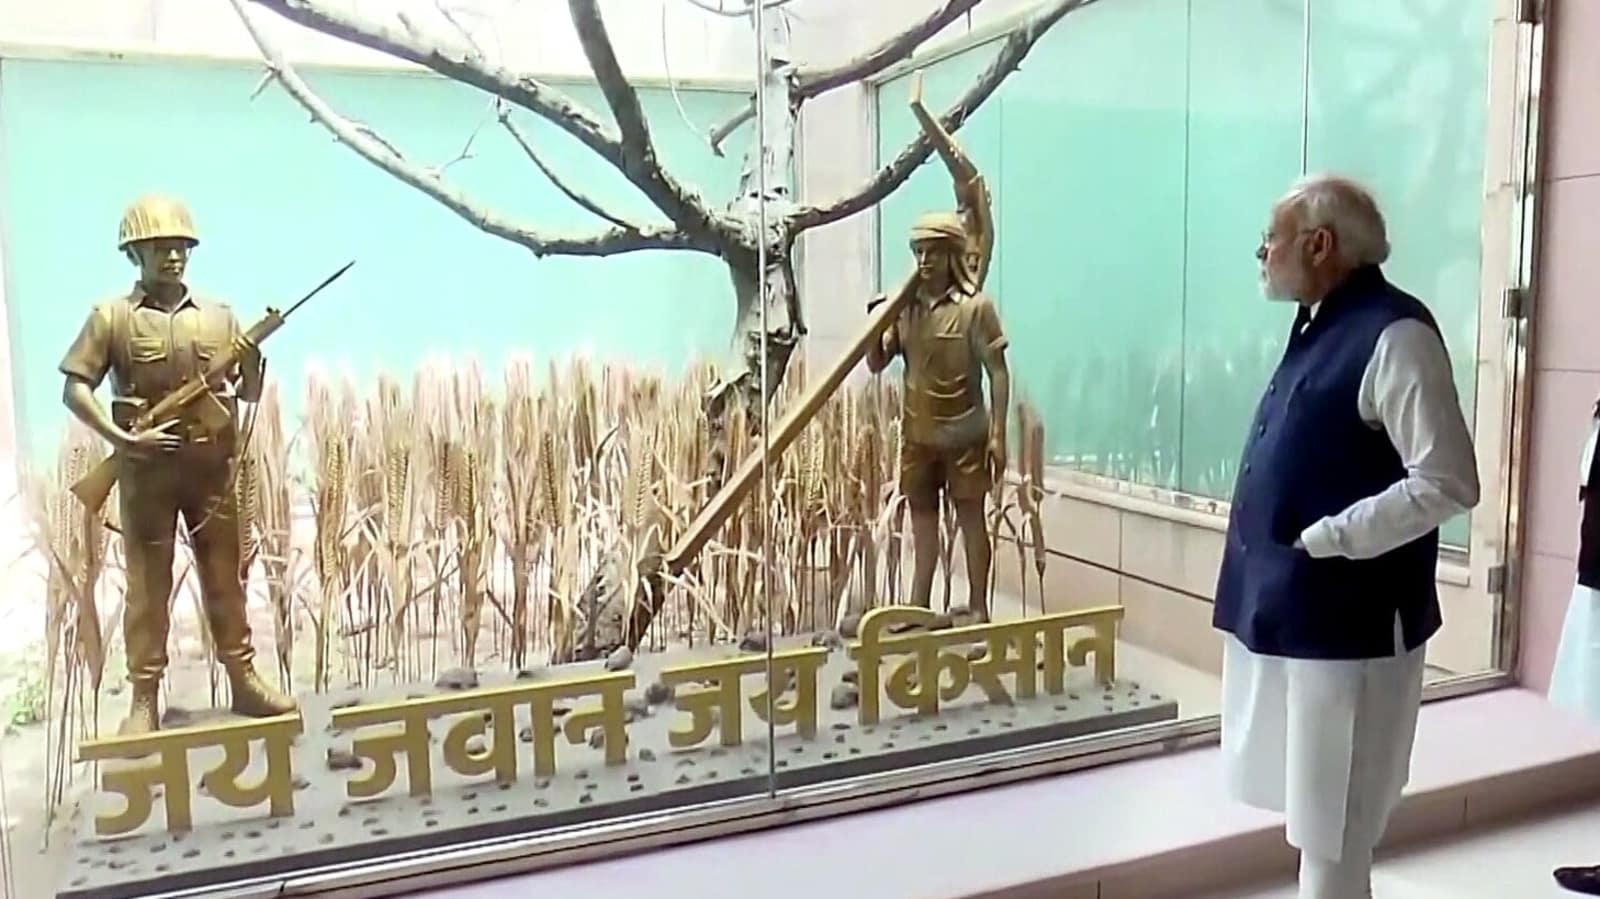 On Museum for PMs, Modi on ‘Mann Ki Baat’ says, ‘A matter of pride’